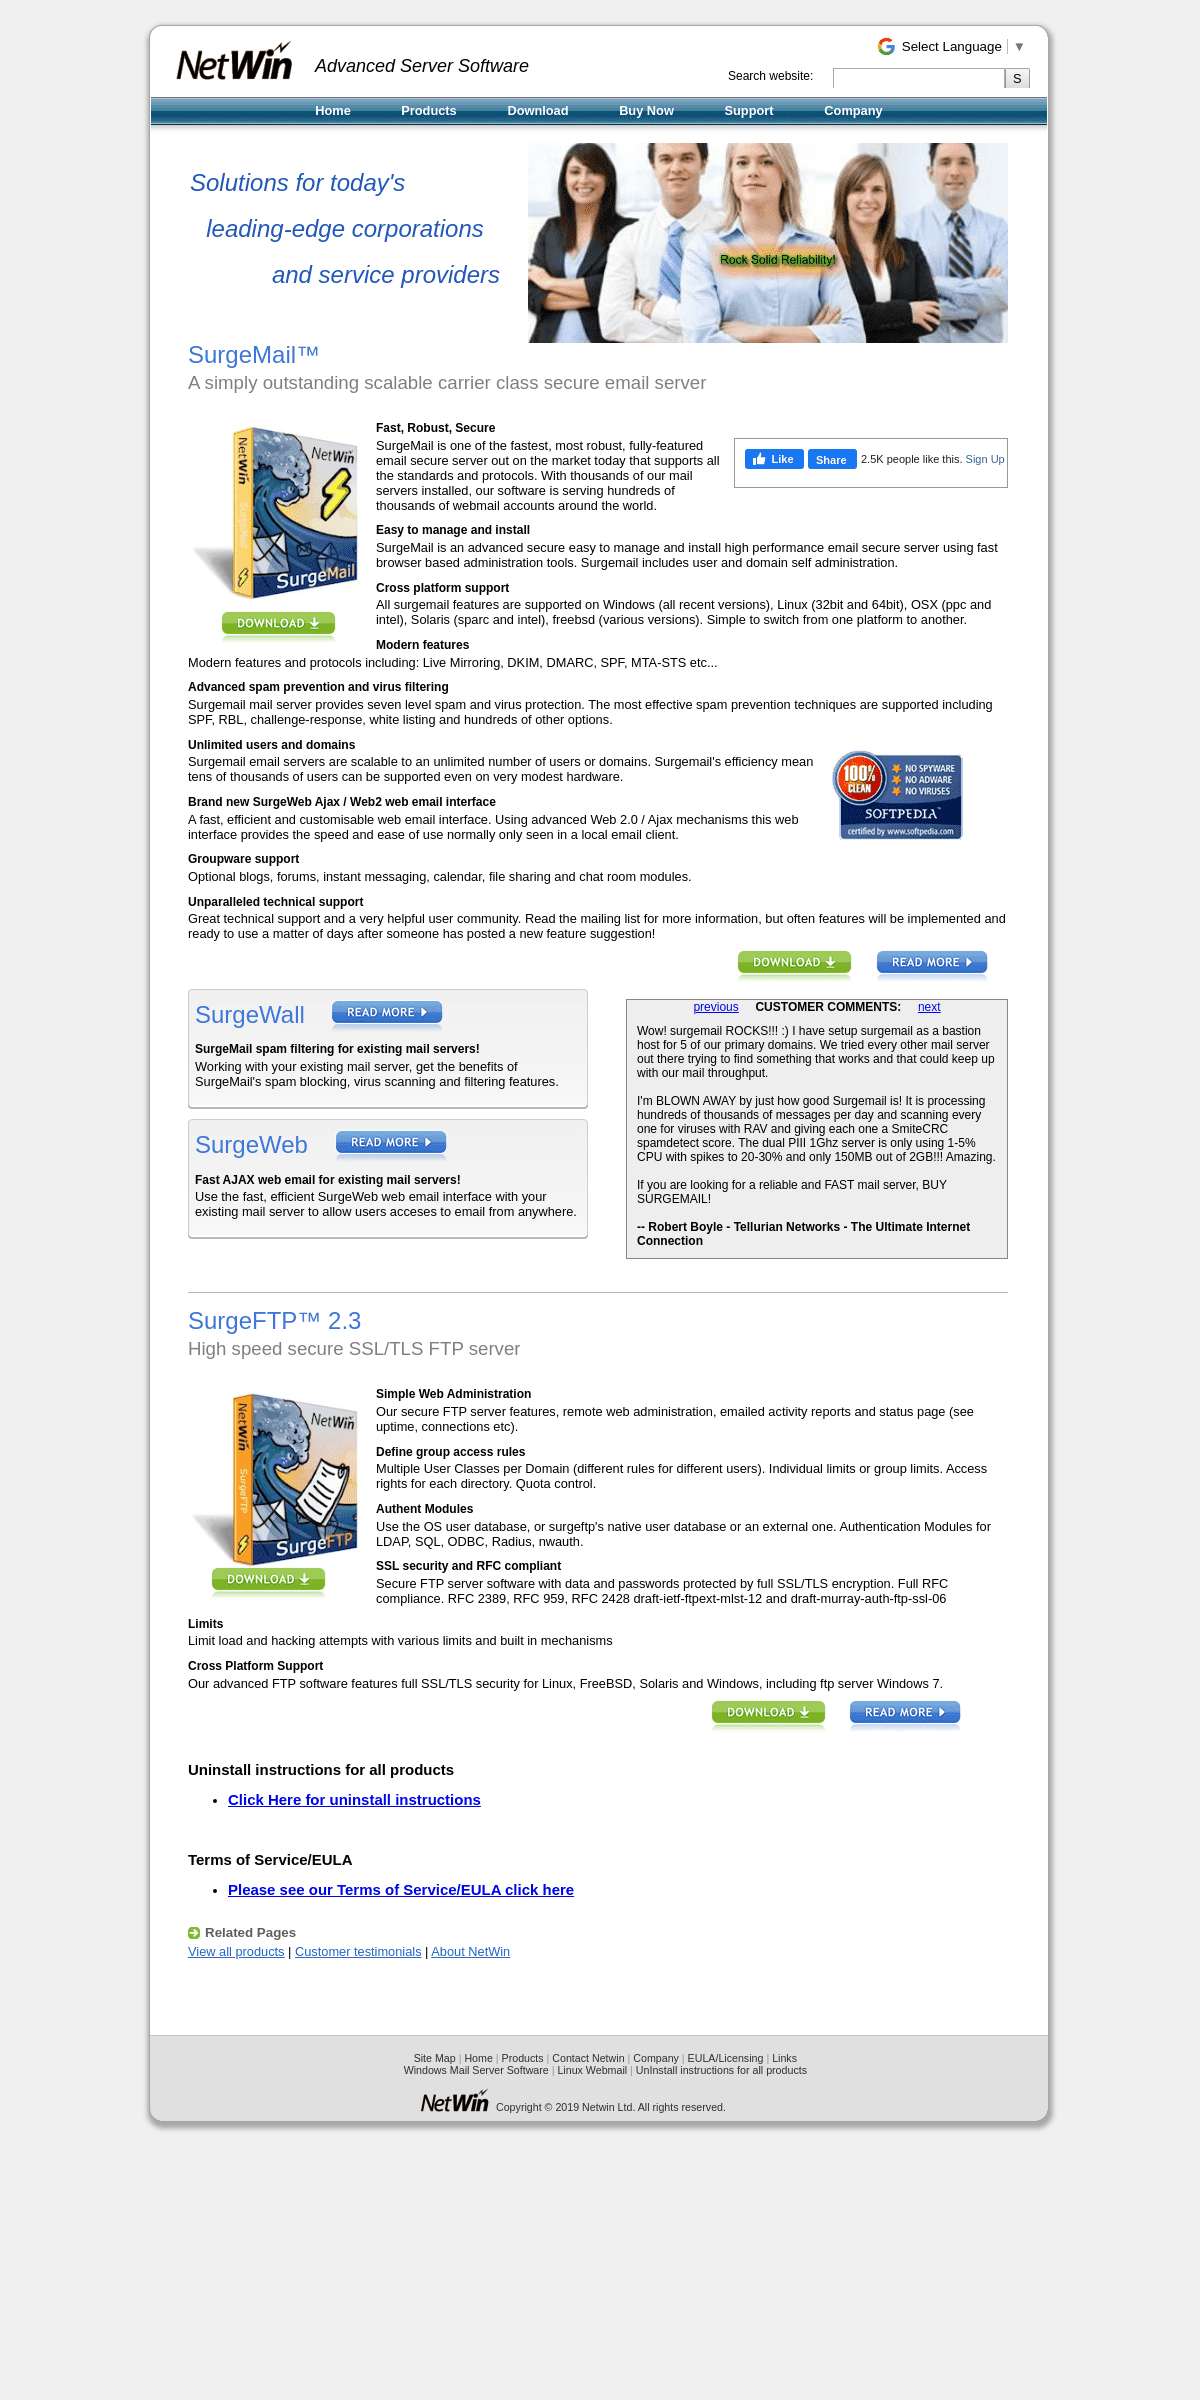 A complete backup of netwinsite.com